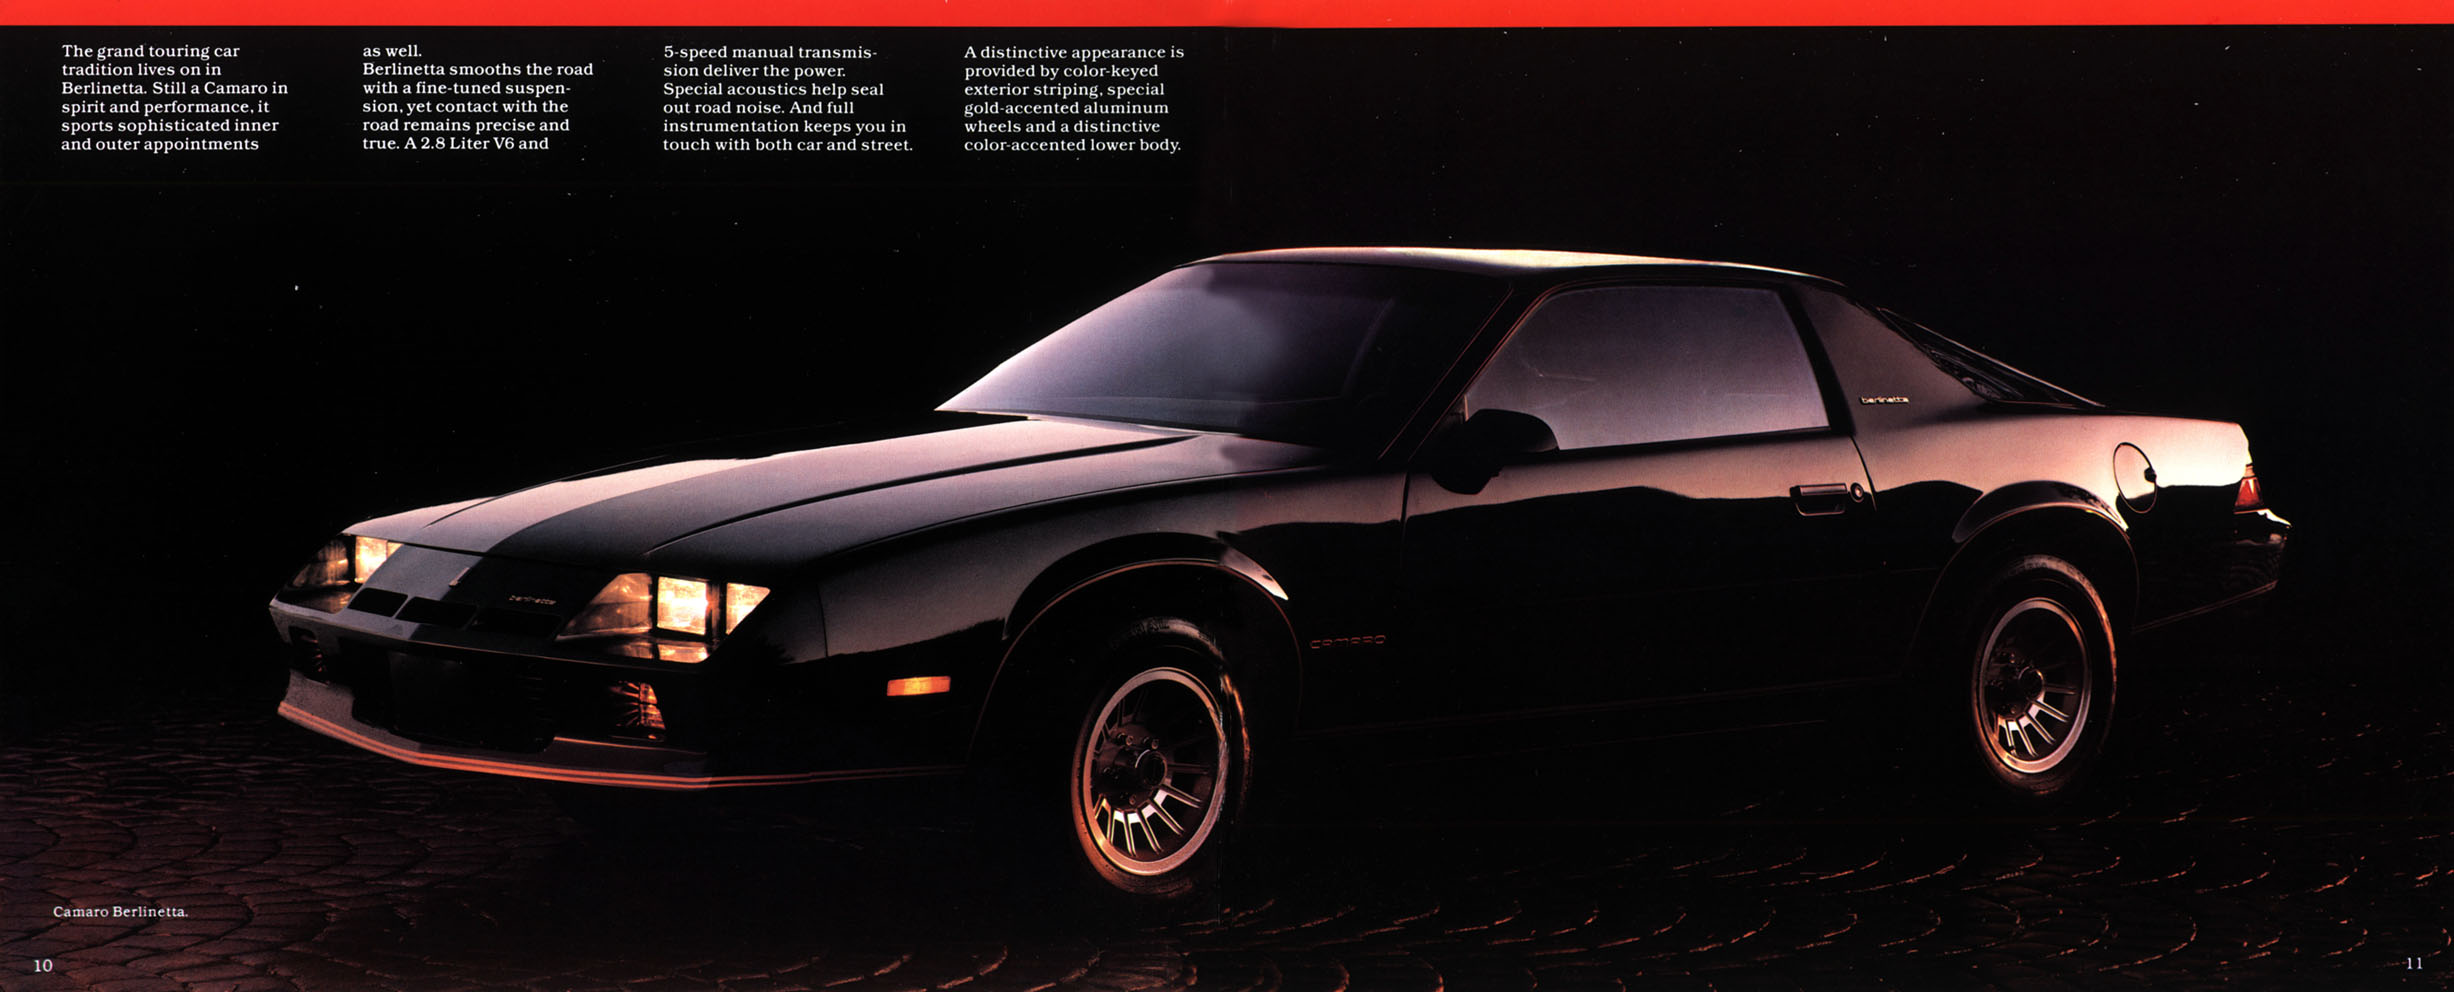 1983_Chevrolet_Camaro-10-11